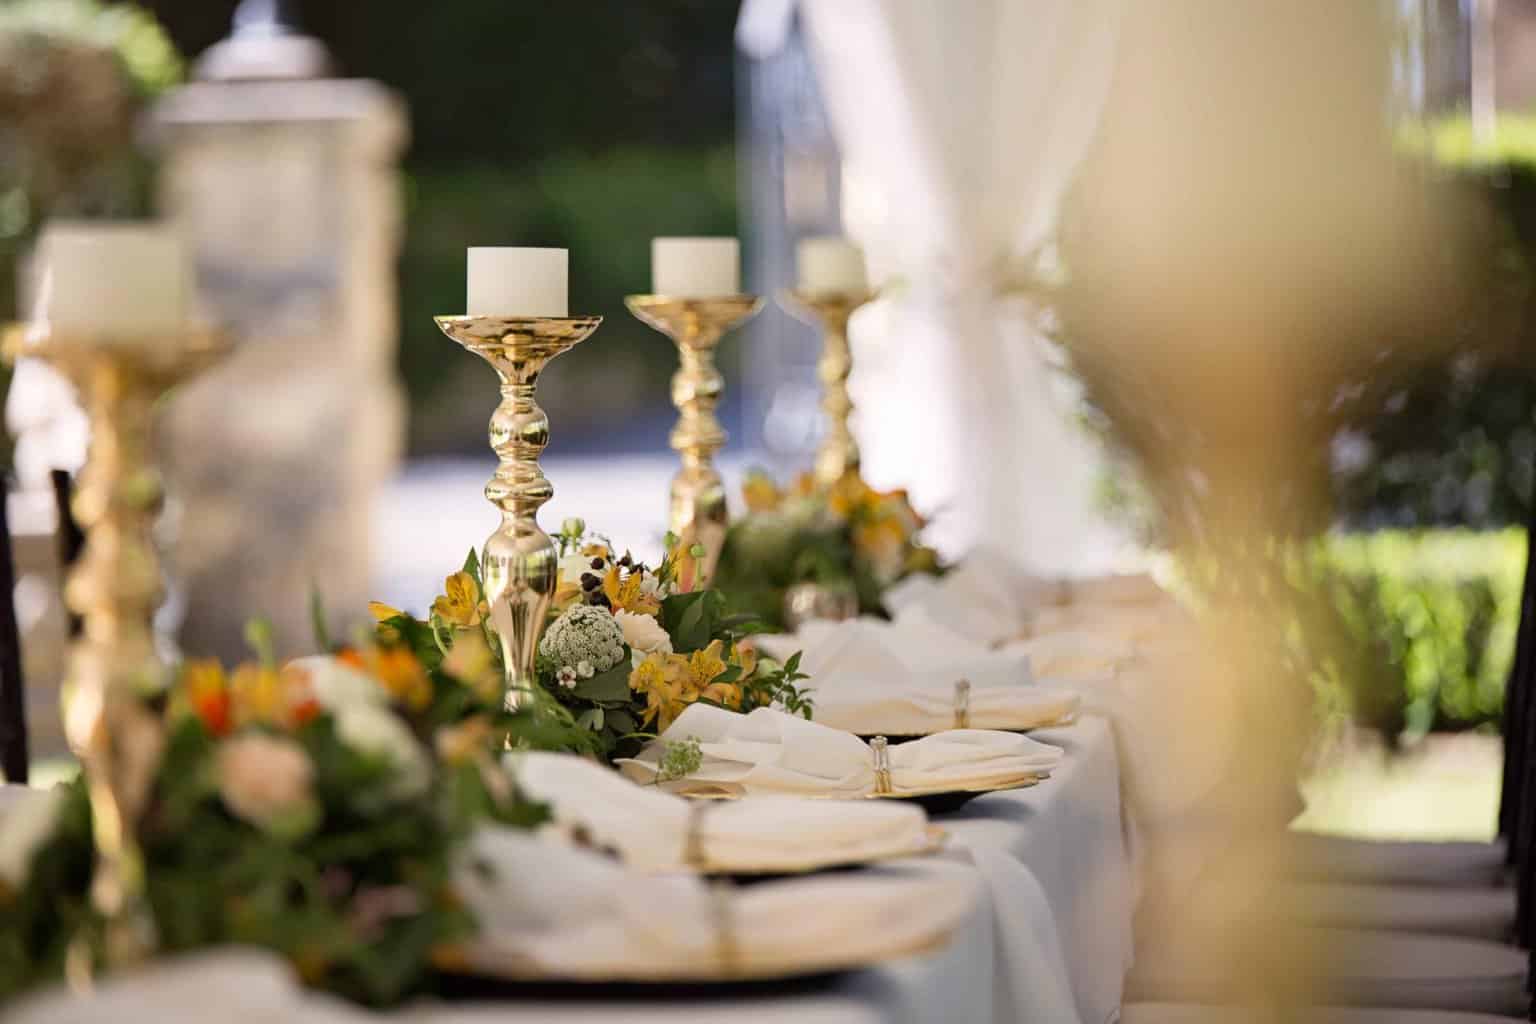 Top 10 Ideas on Wedding Flower Centerpieces According to Seasons